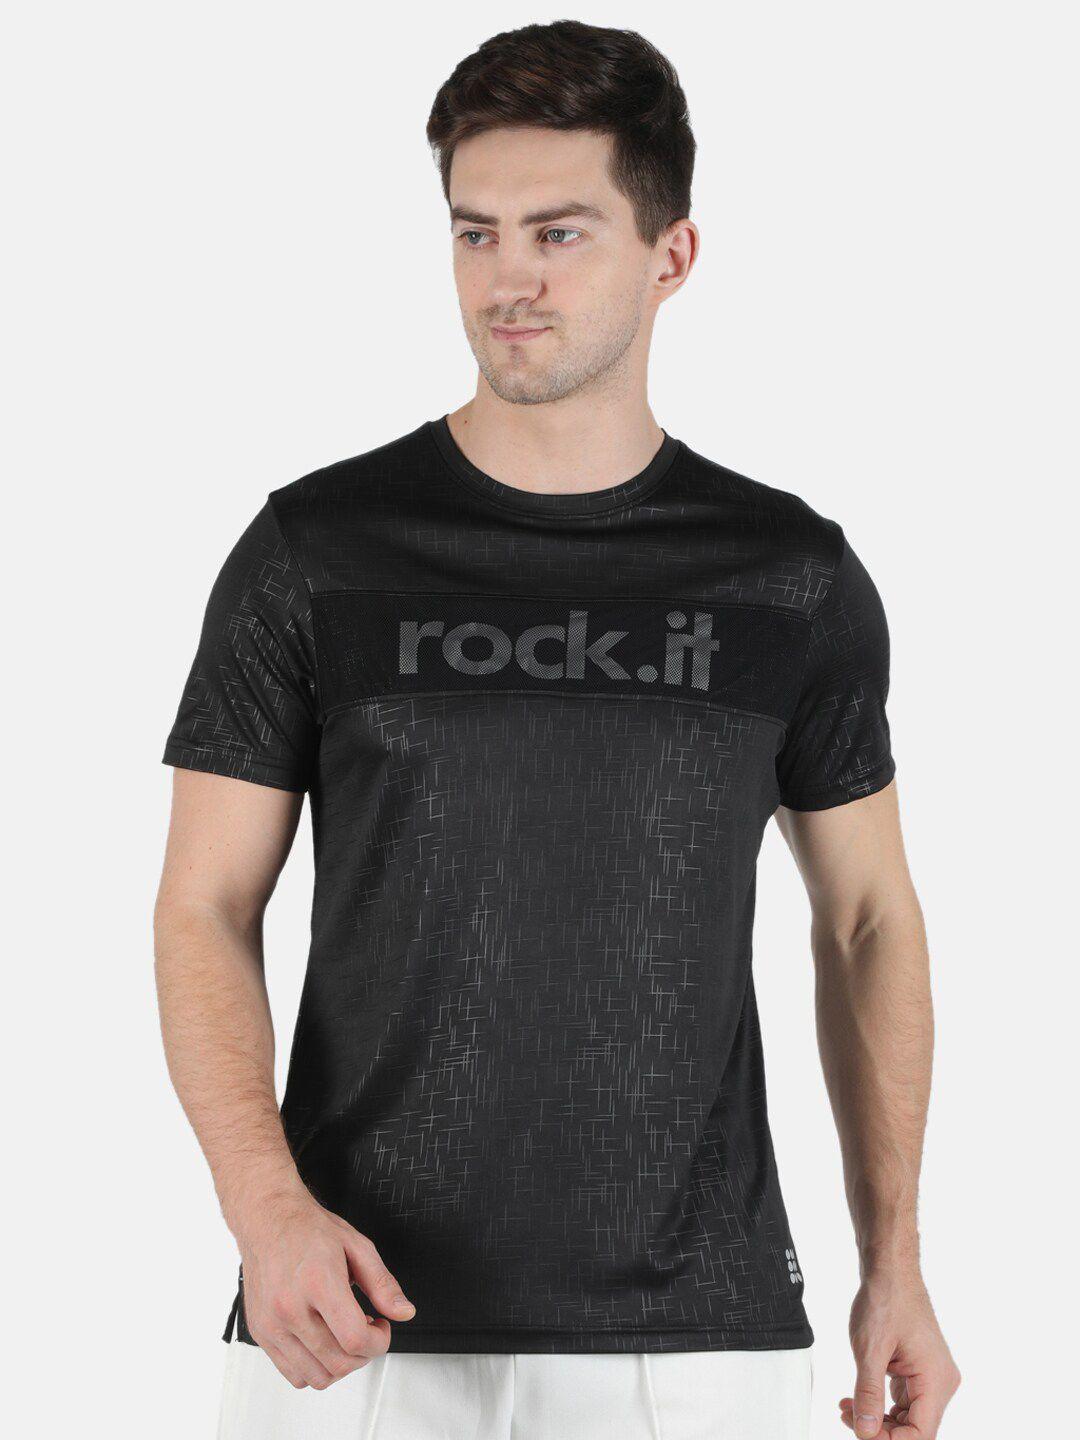 rock it men black typography printed applique training or gym t-shirt